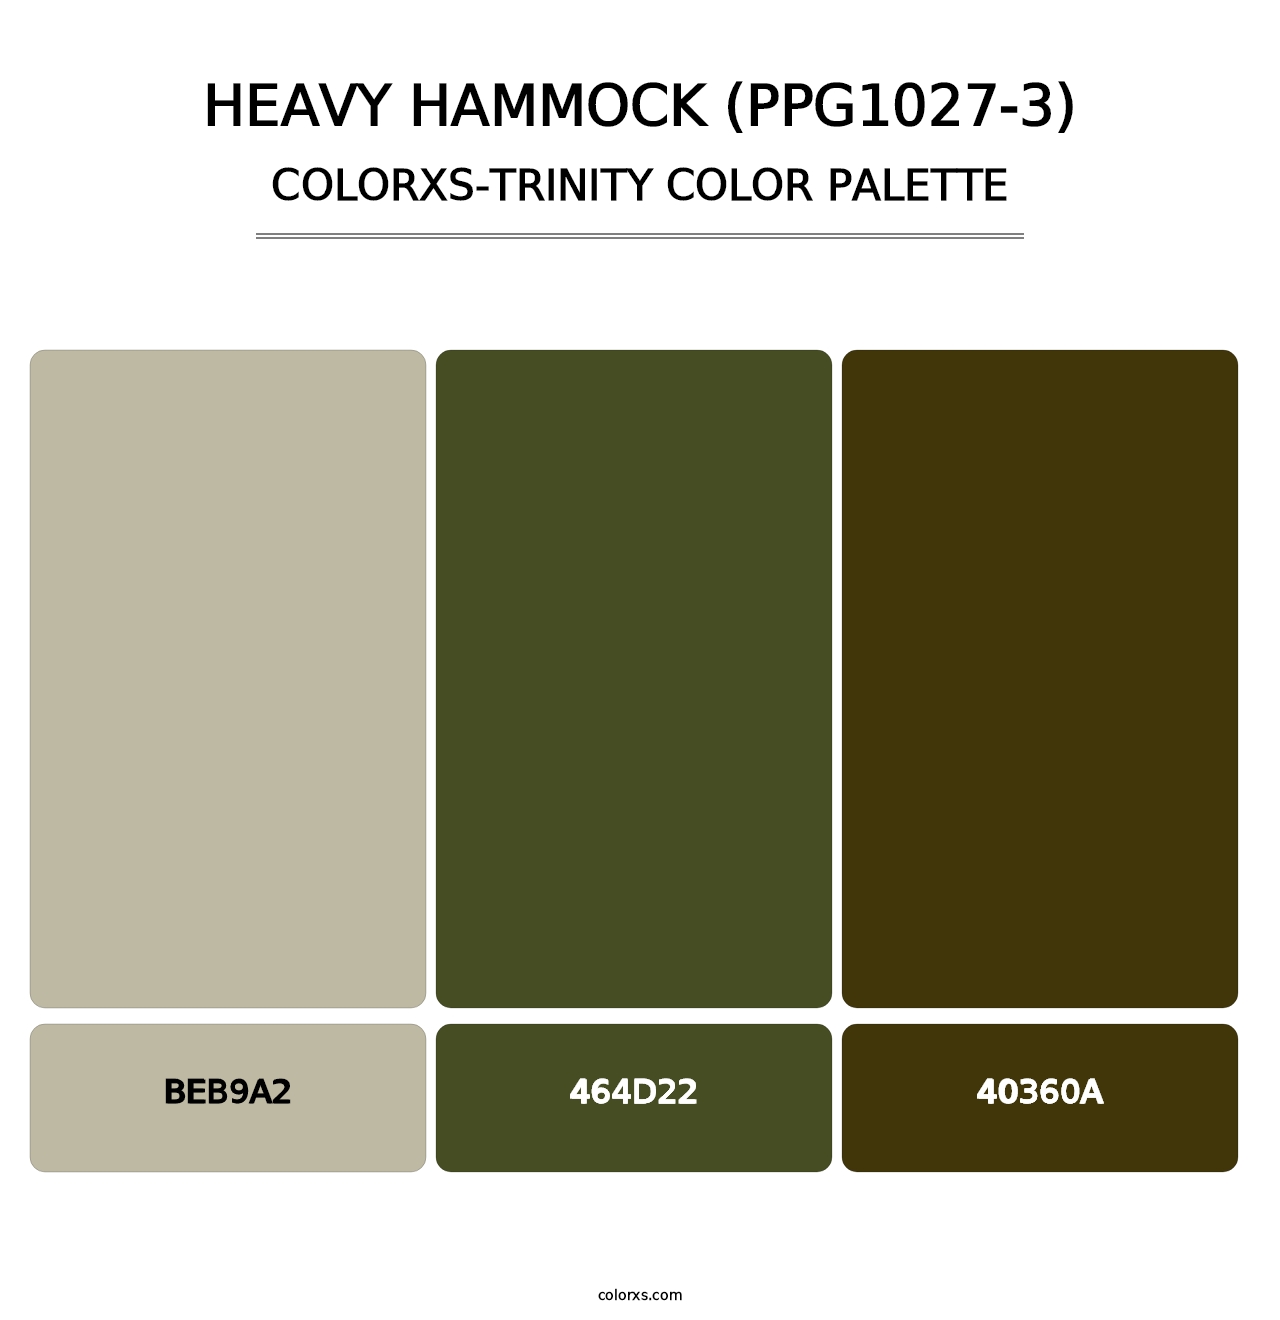 Heavy Hammock (PPG1027-3) - Colorxs Trinity Palette